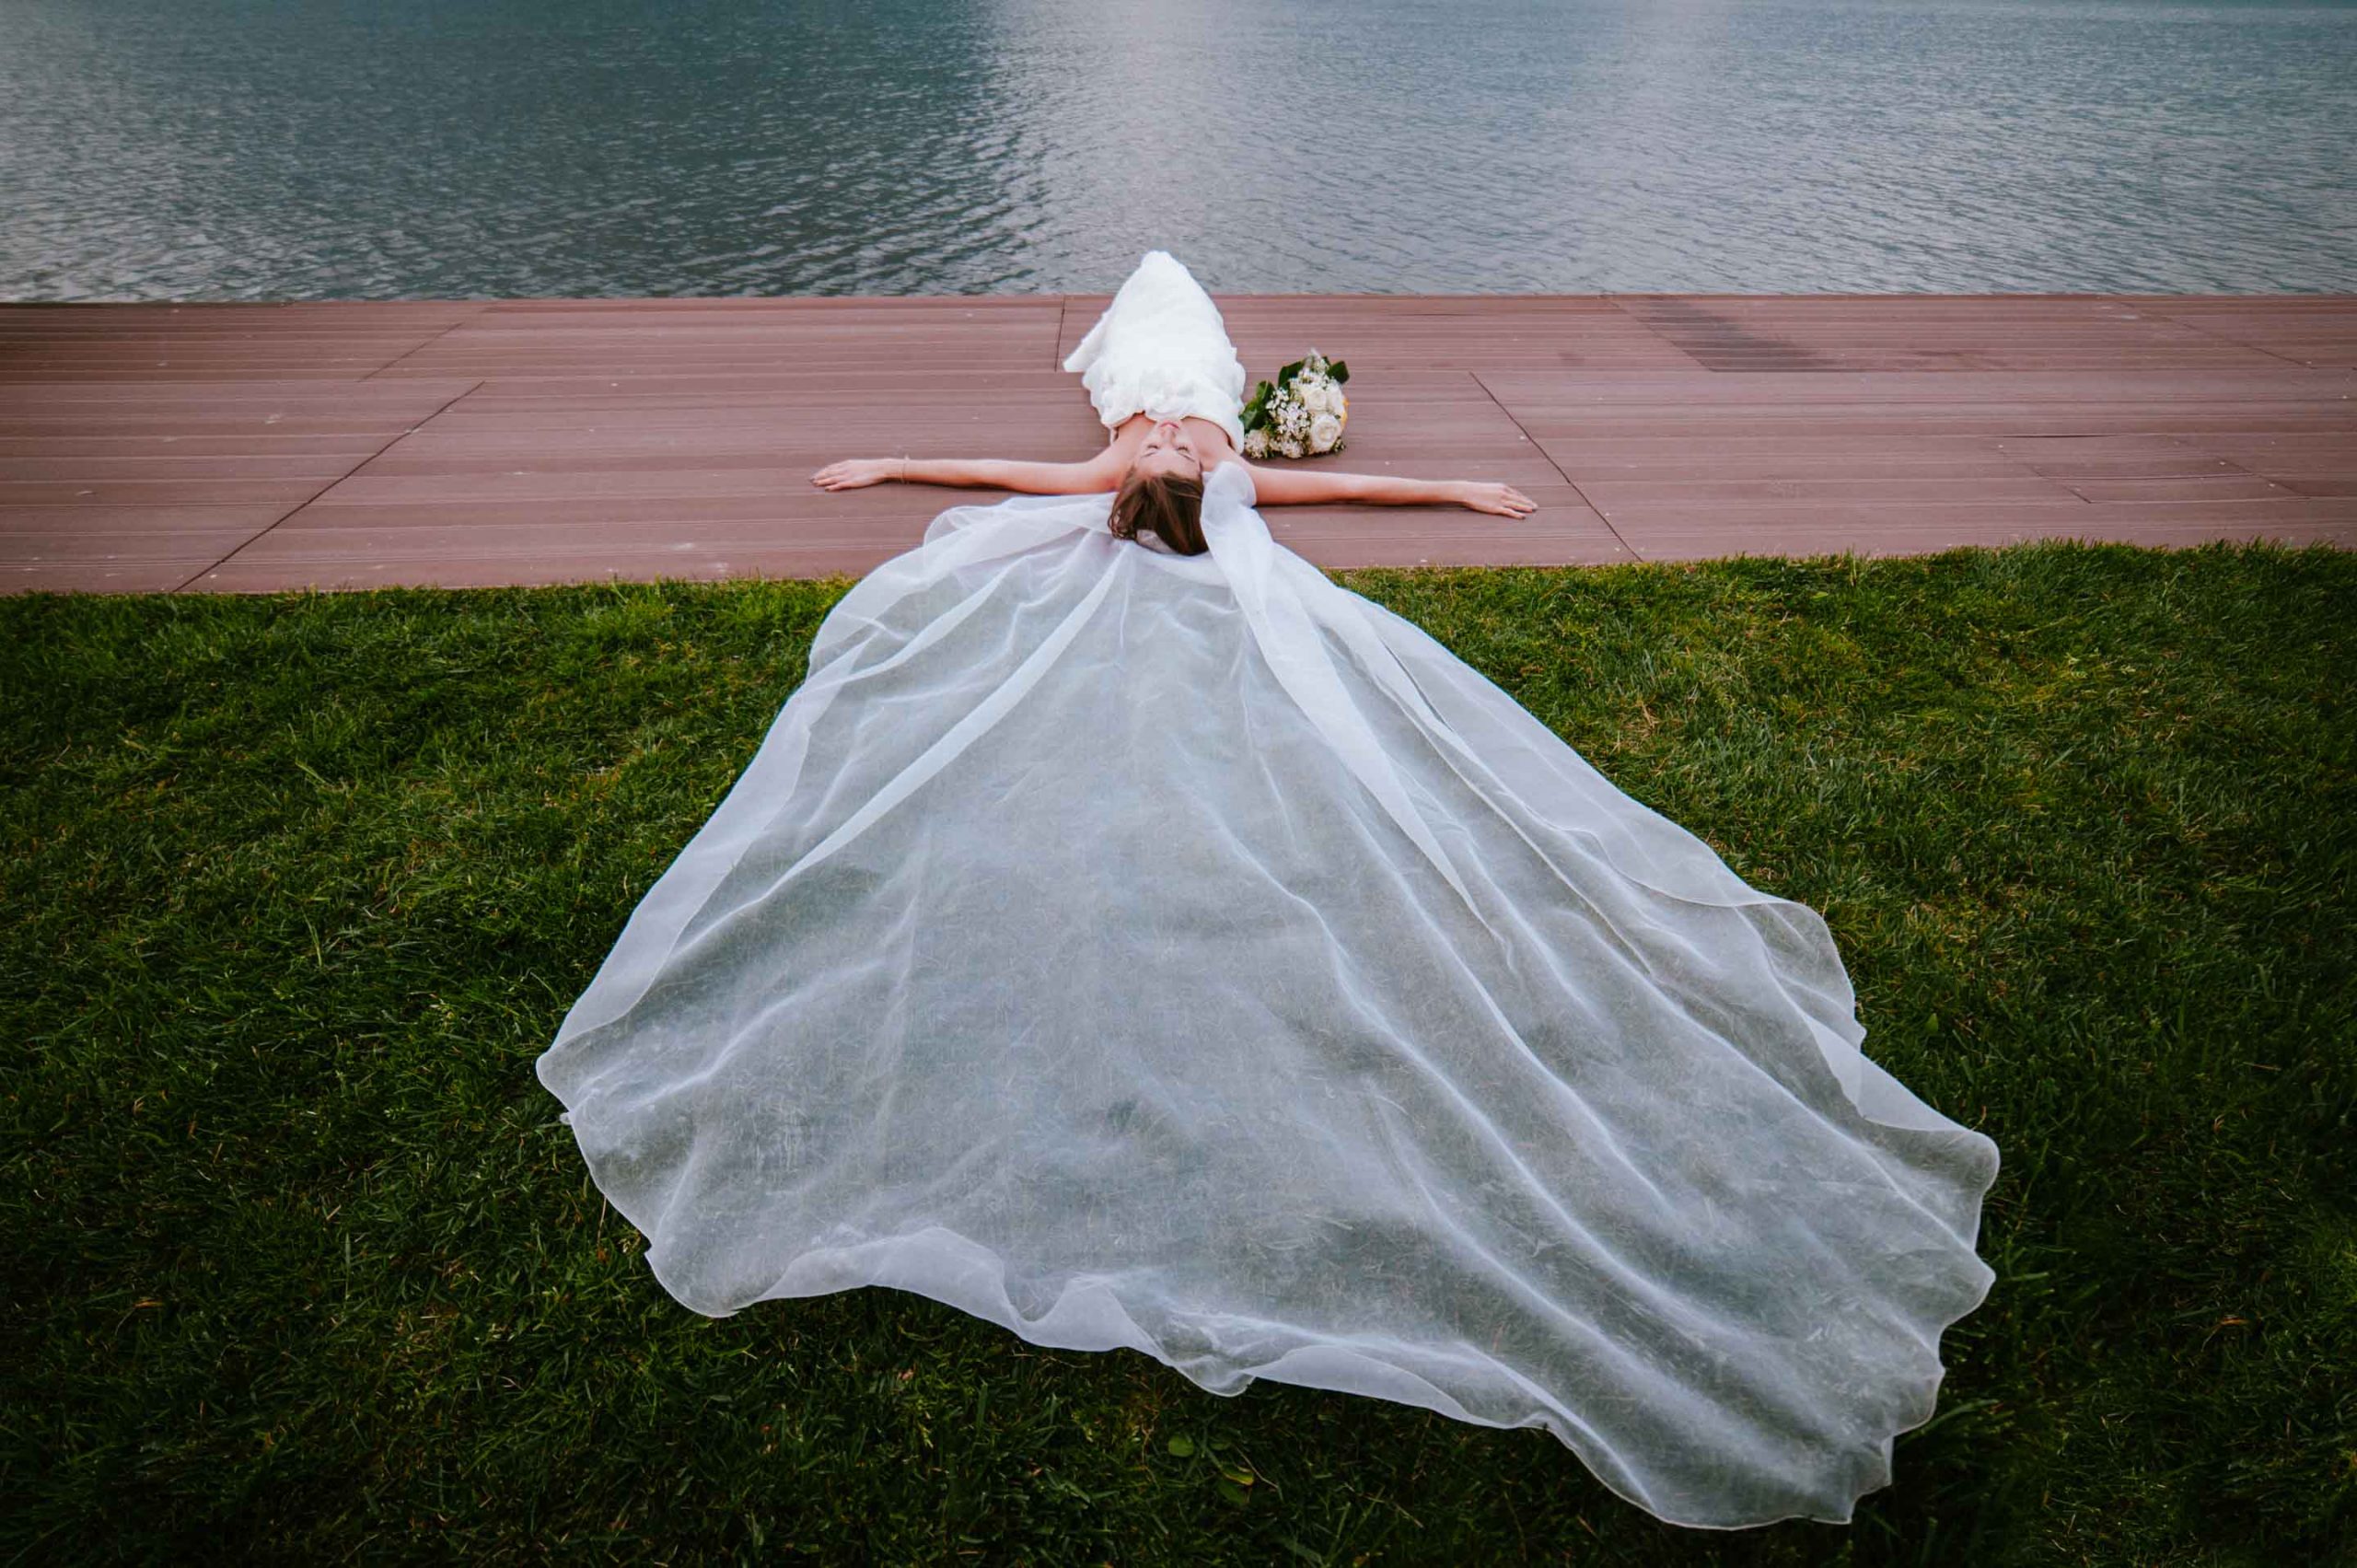 trash the dress at Garda lake - Giuseppe Torretta